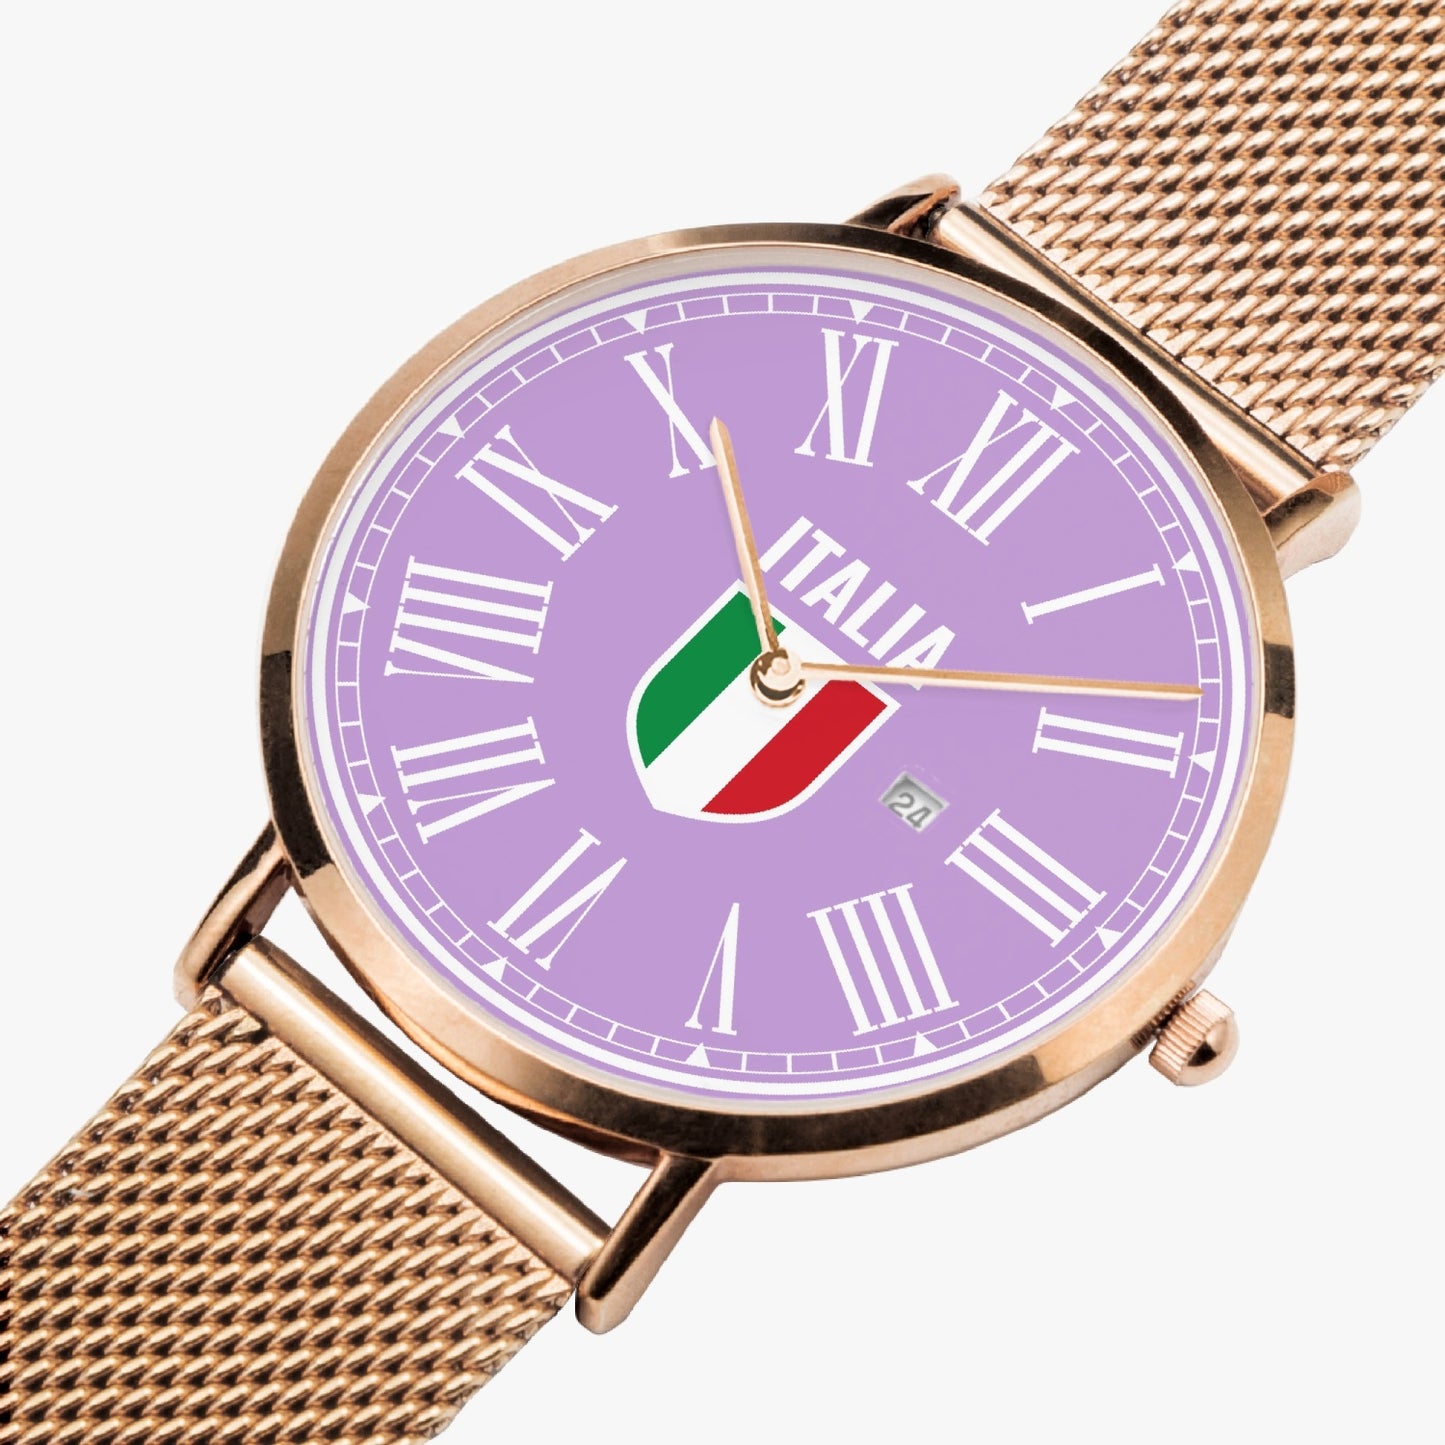 Ultra-thin Stainless Steel Calendar Quartz Watch - Italy purple